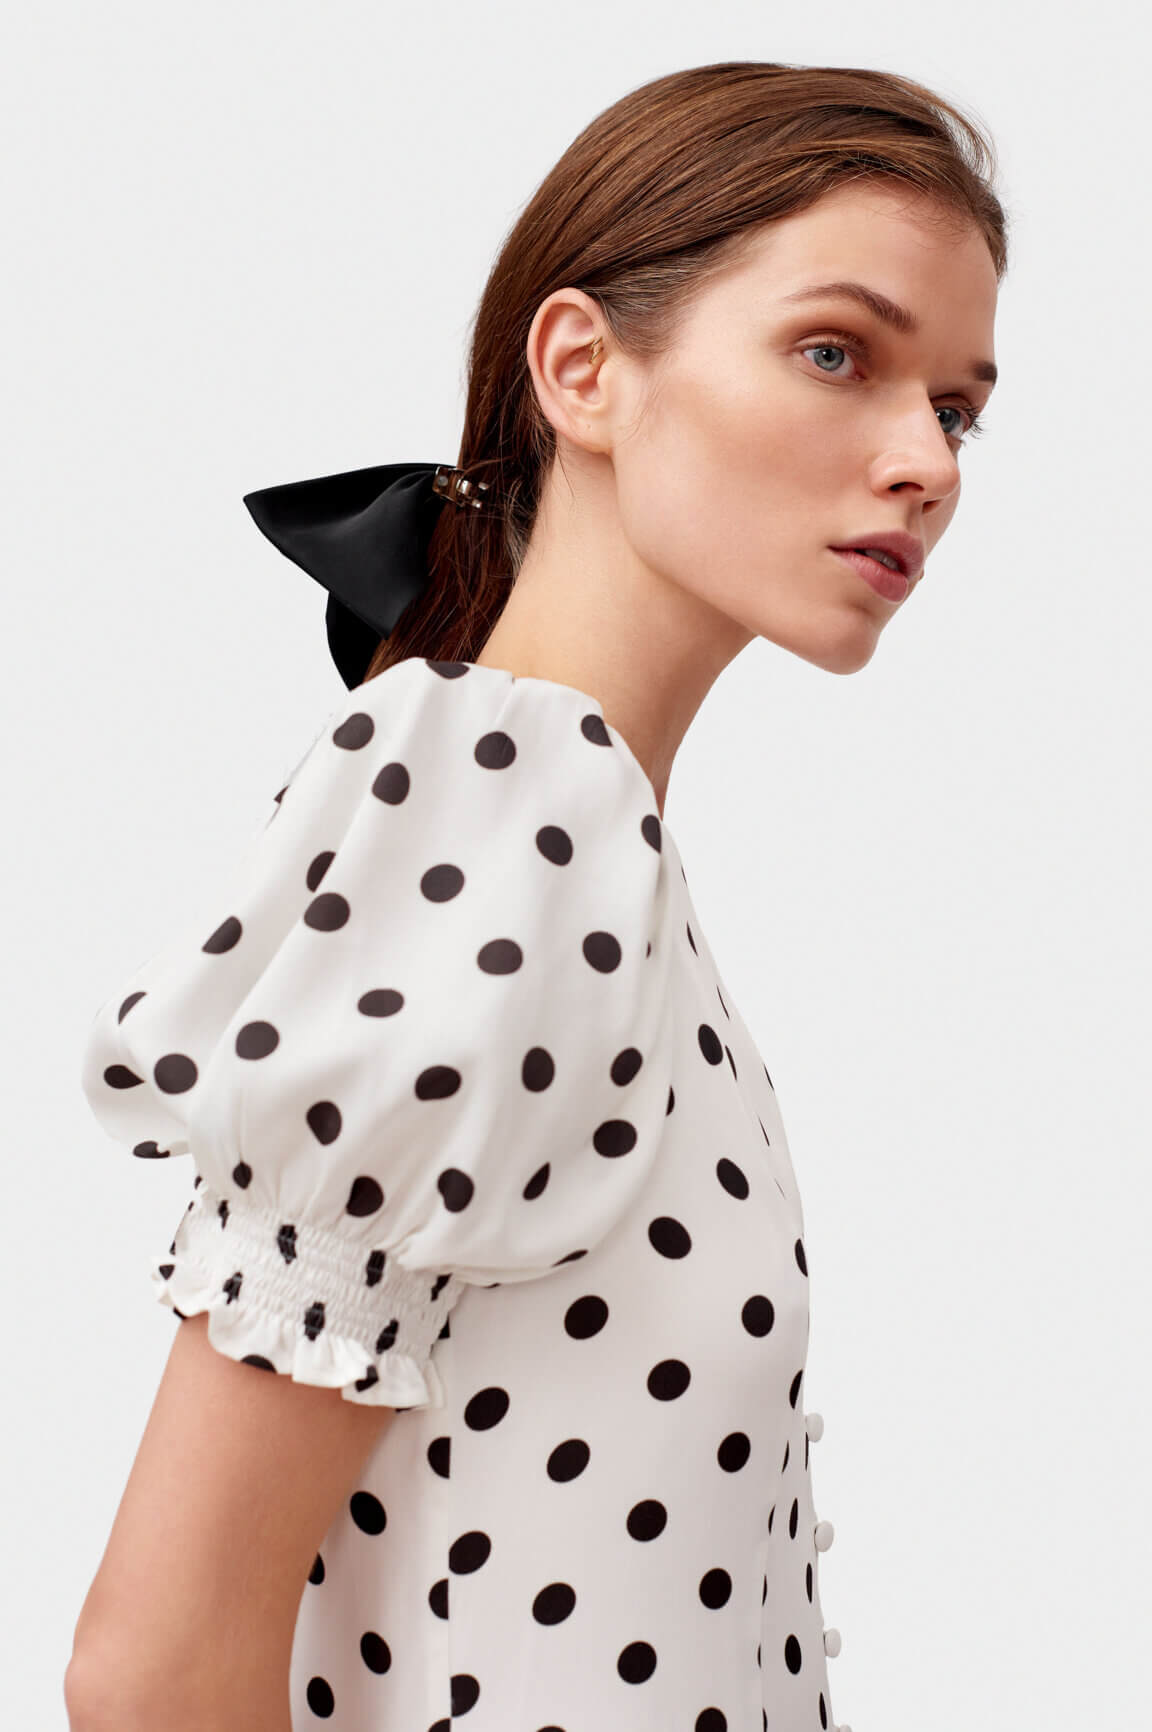 White polka dot dress | Sleeper dress with black dots